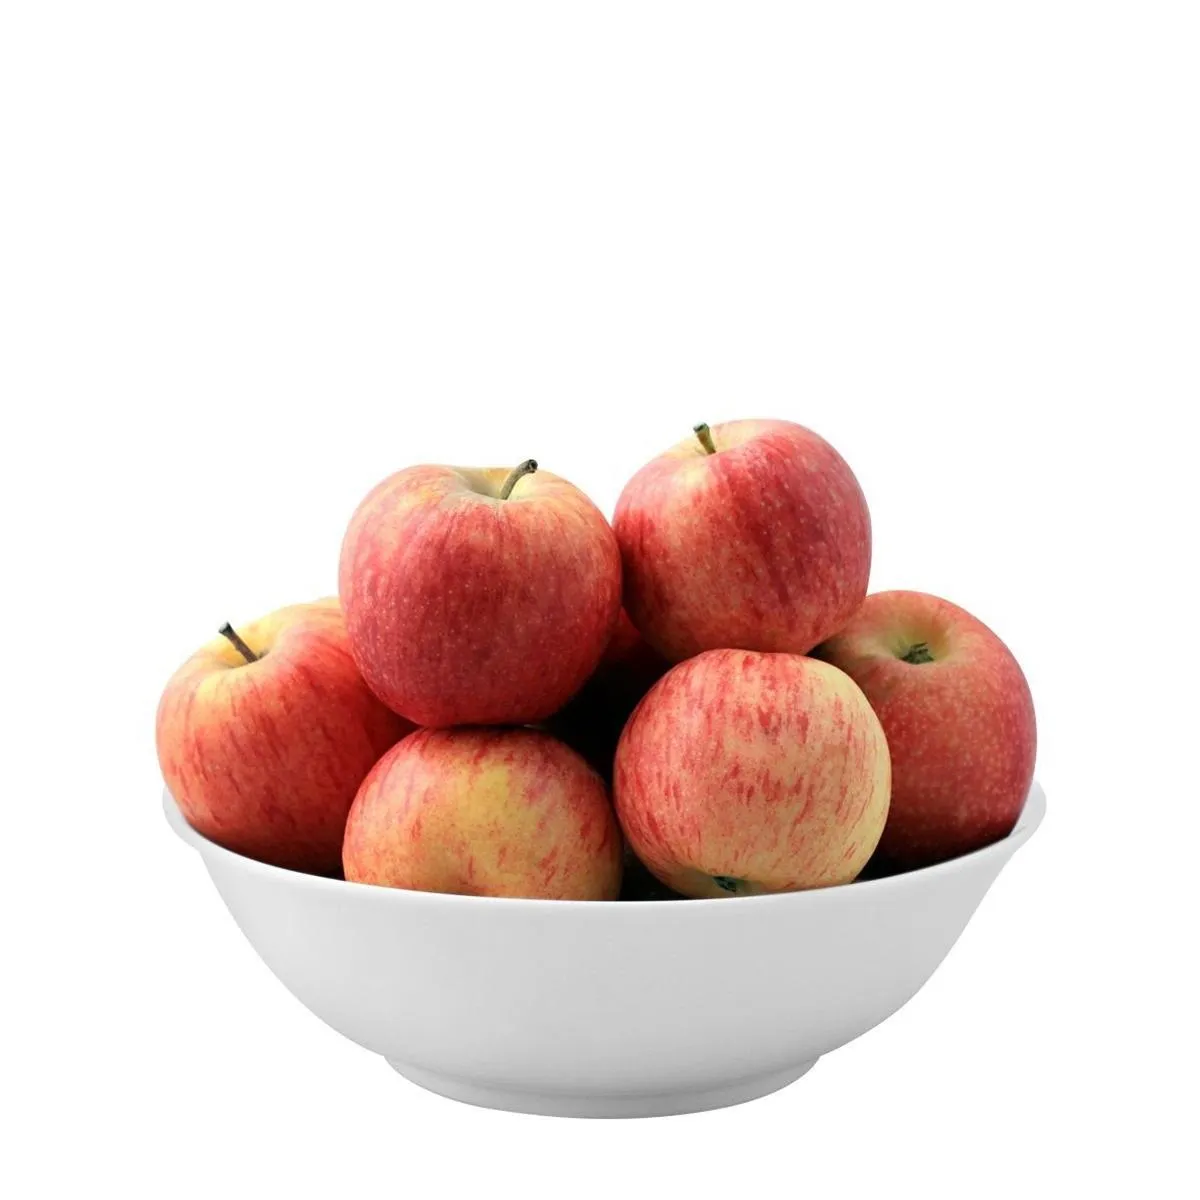 Buy and wholesale price of redlum gala apple